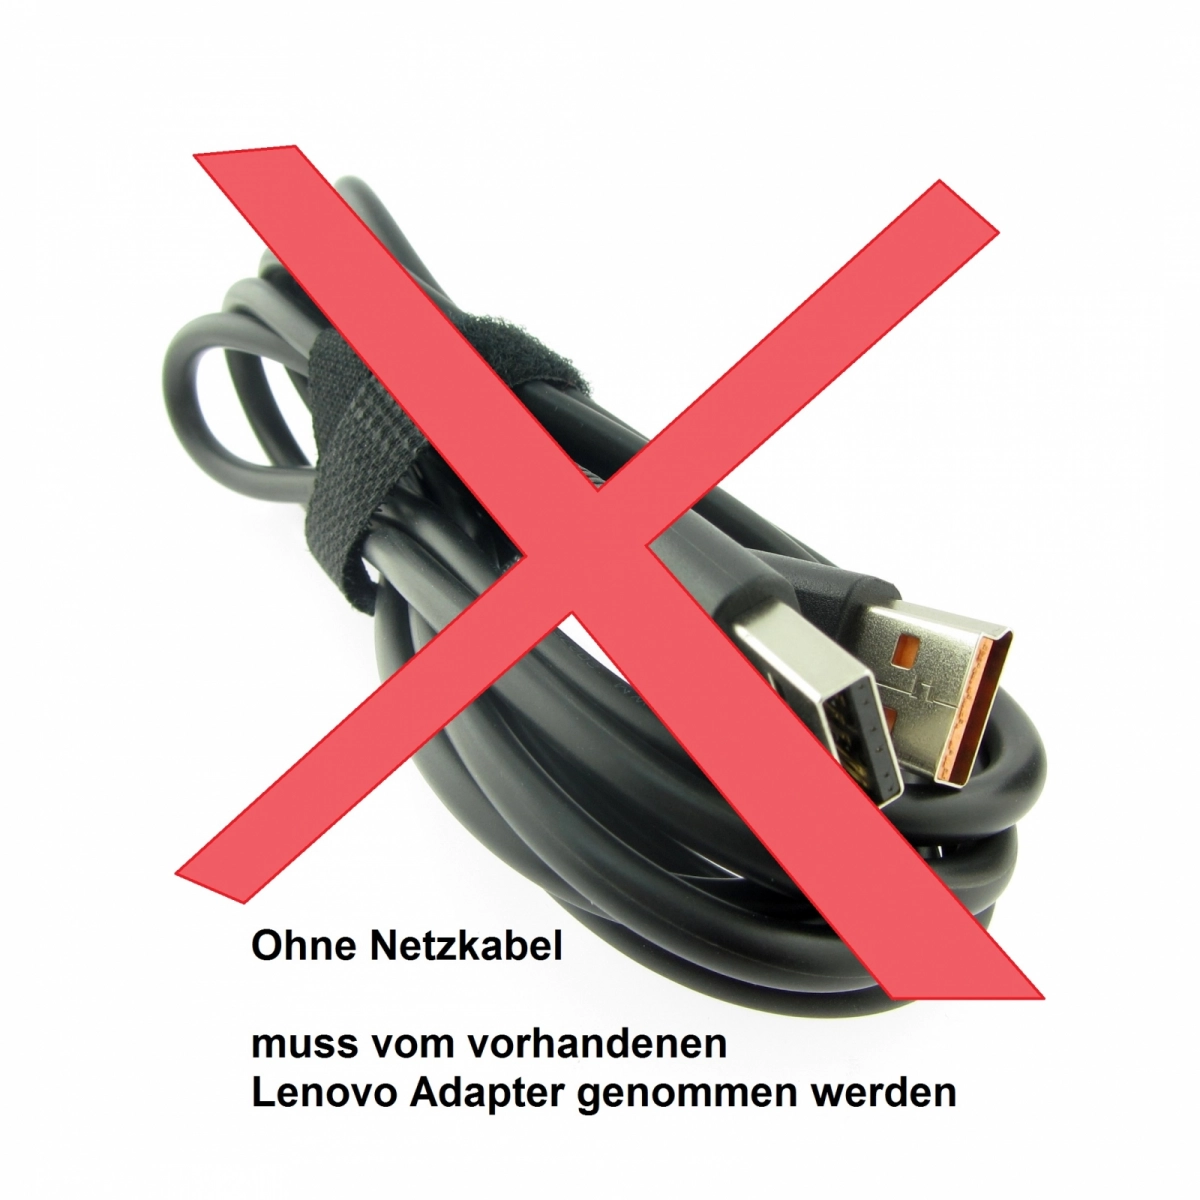 Original Netzteil für LENOVO ADL40WLB 36200573, 20V, 2A, Stecker USB, ohne USB-Kabel